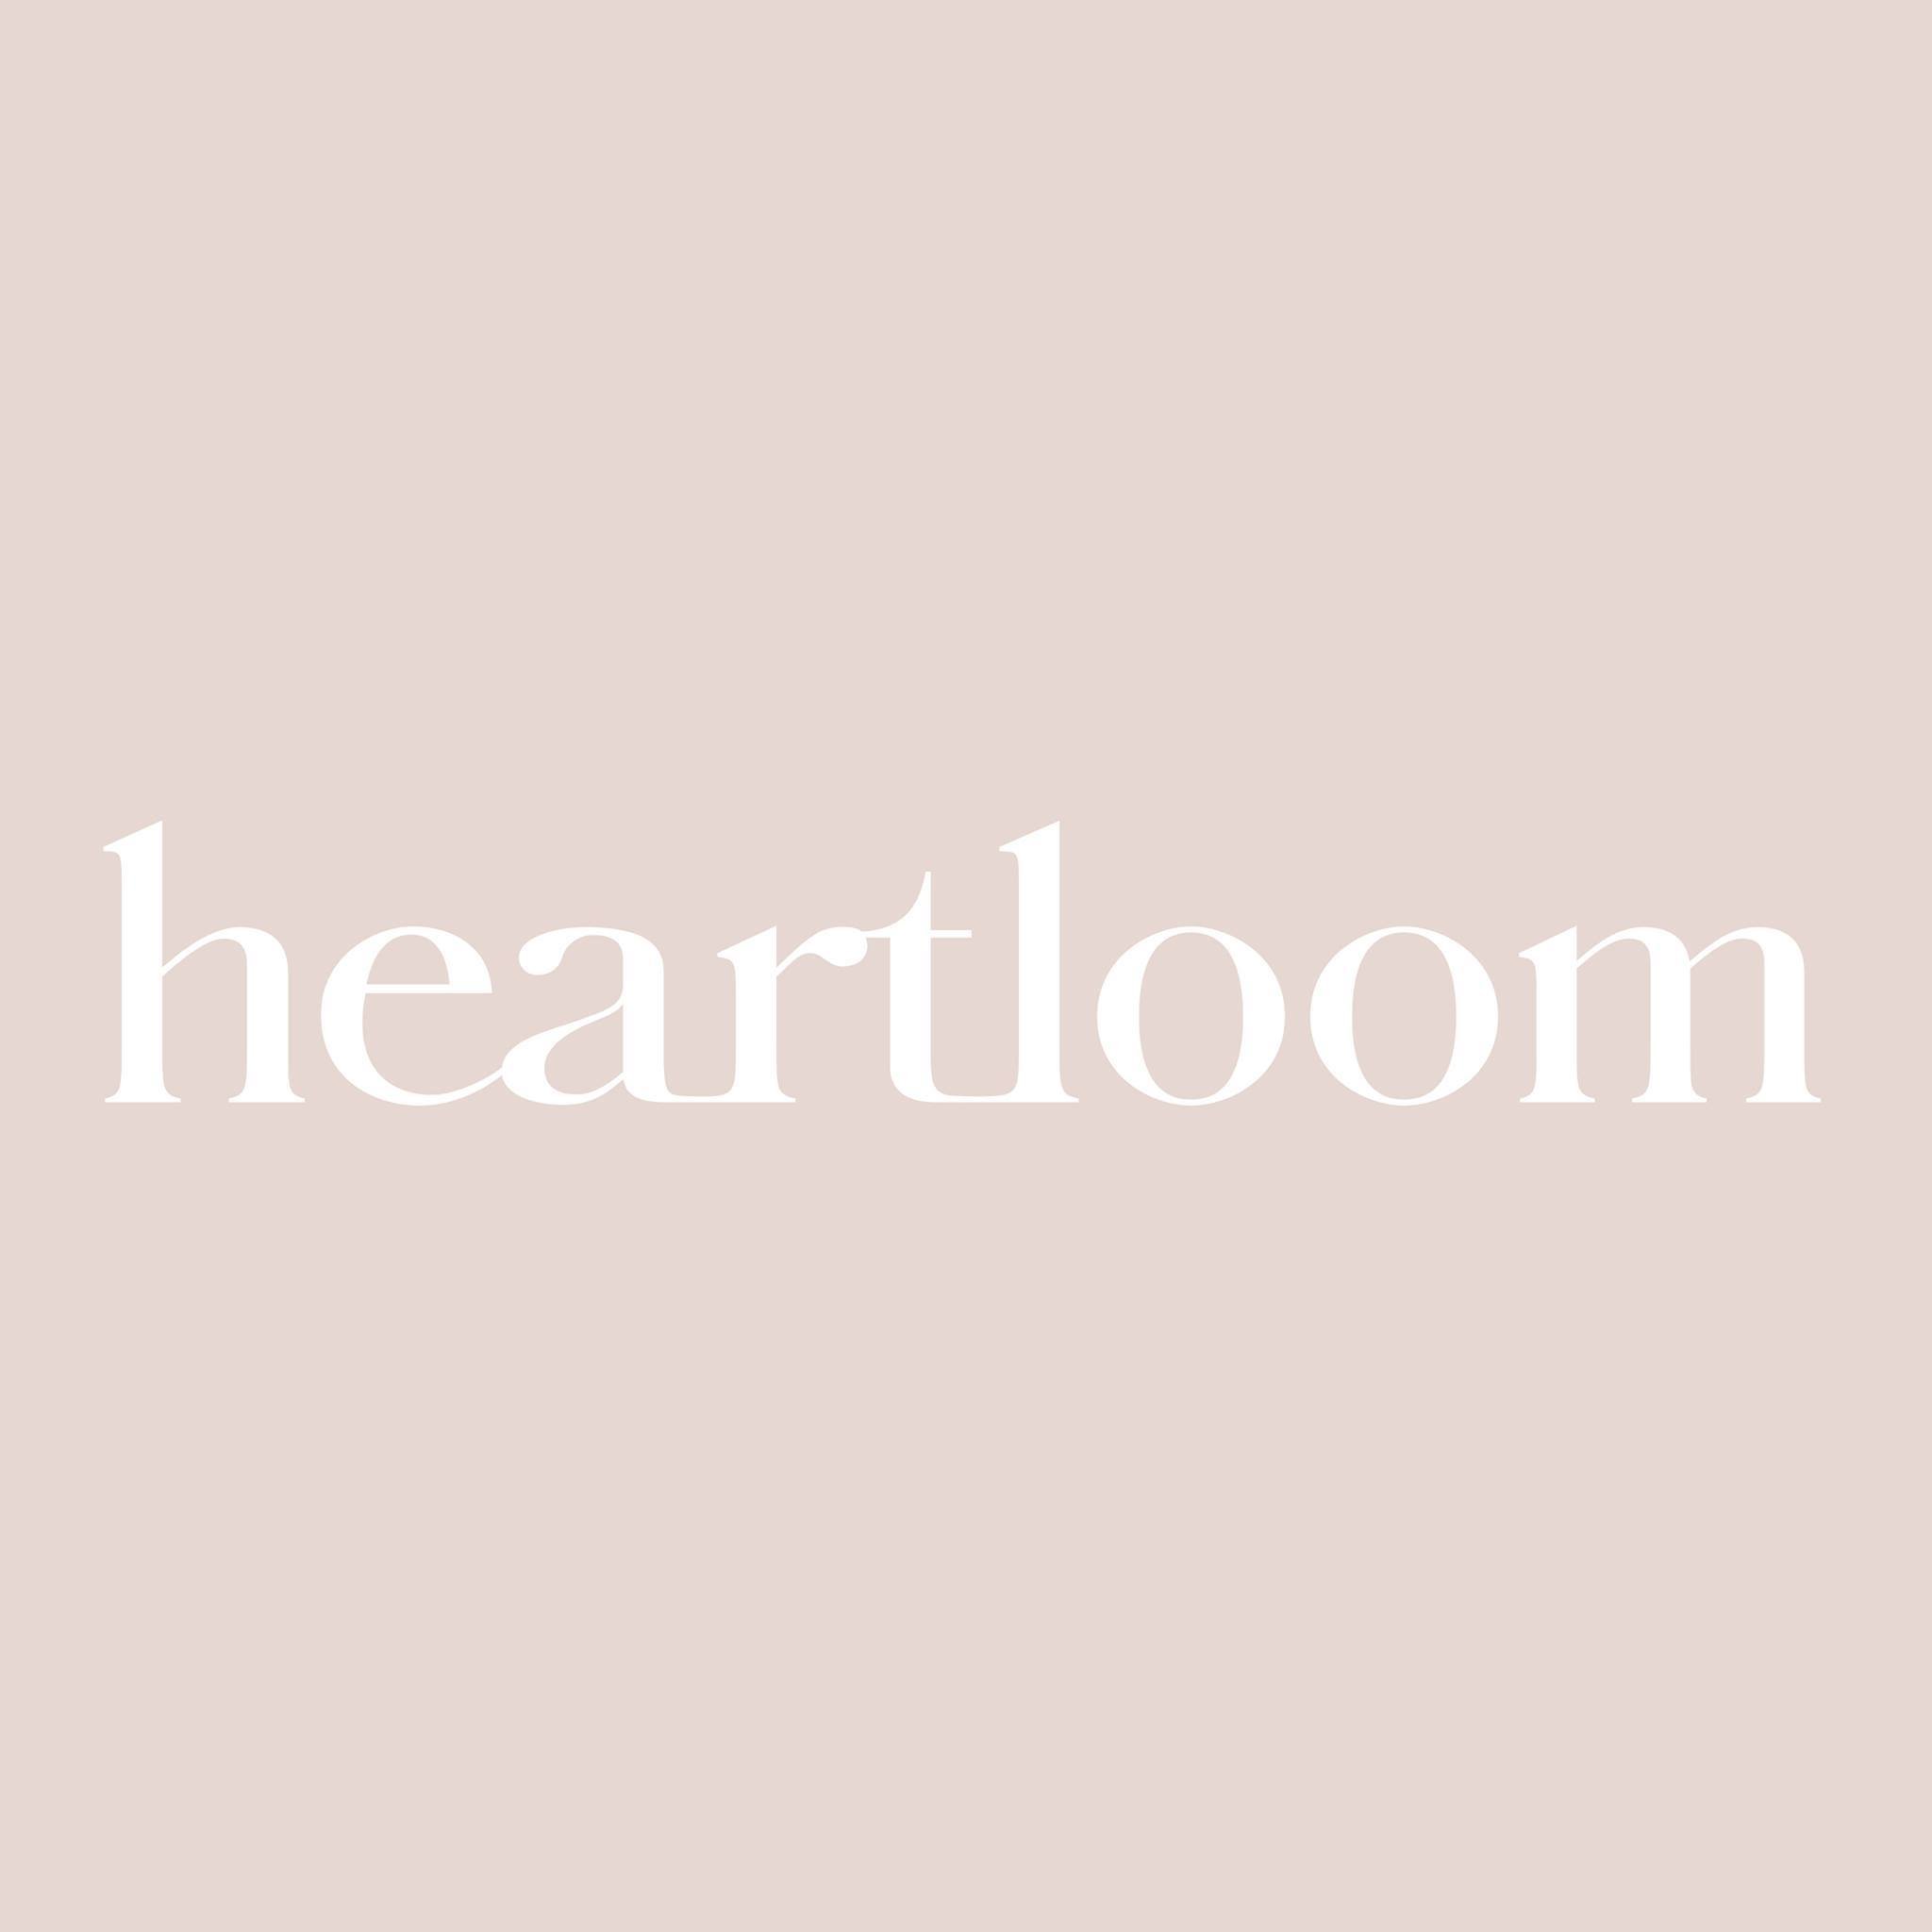 Heartloom Size charts